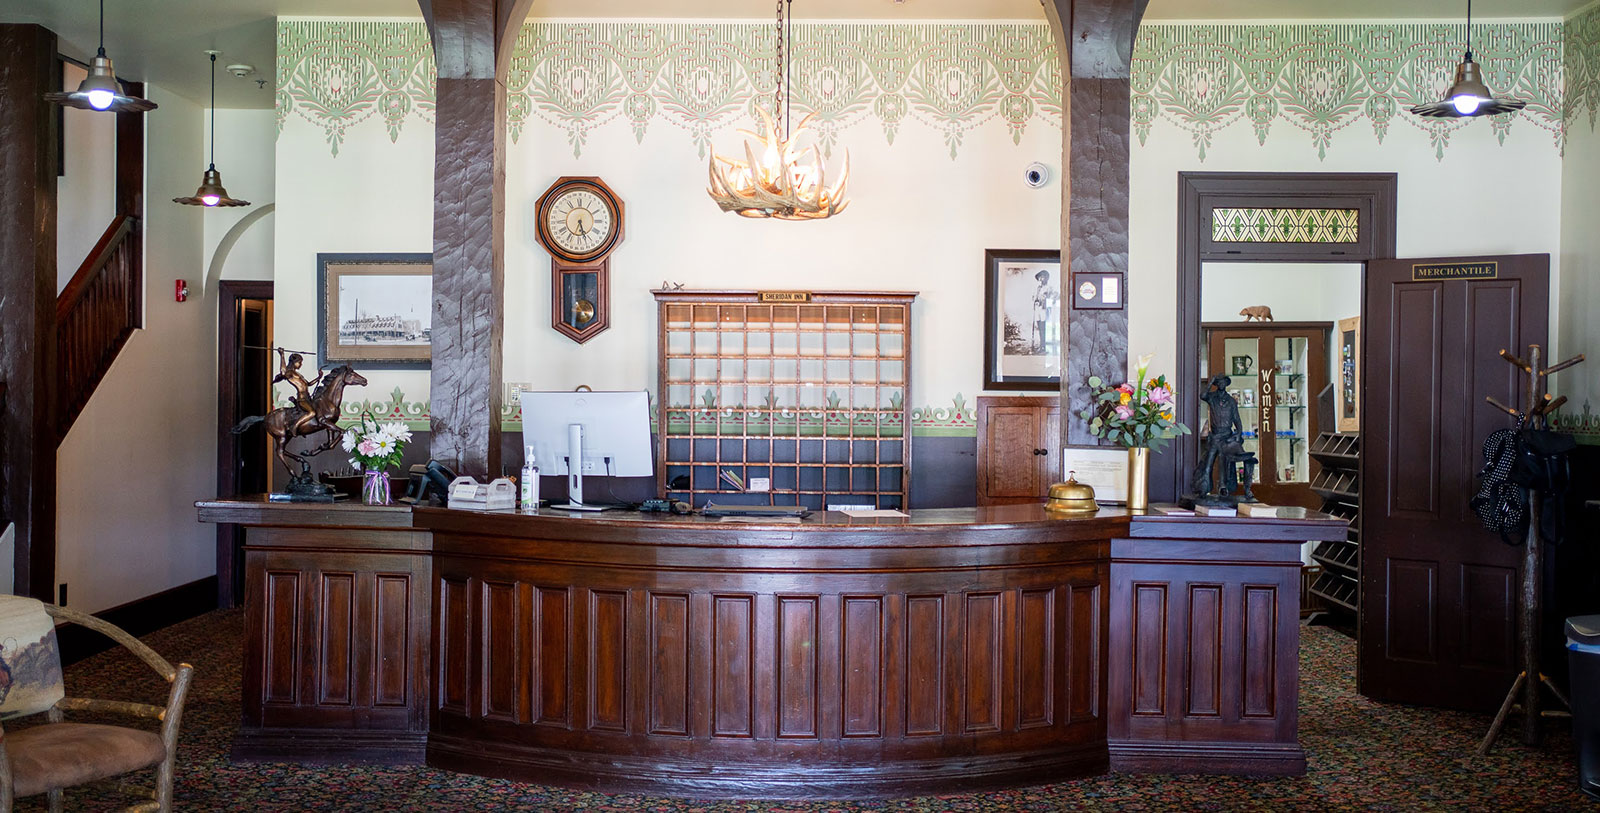 Image of Hotel Exterior, Sheridan Inn, 1893, Member of Historic Hotels of America, in Sheridan Wyoming, Hot Deals